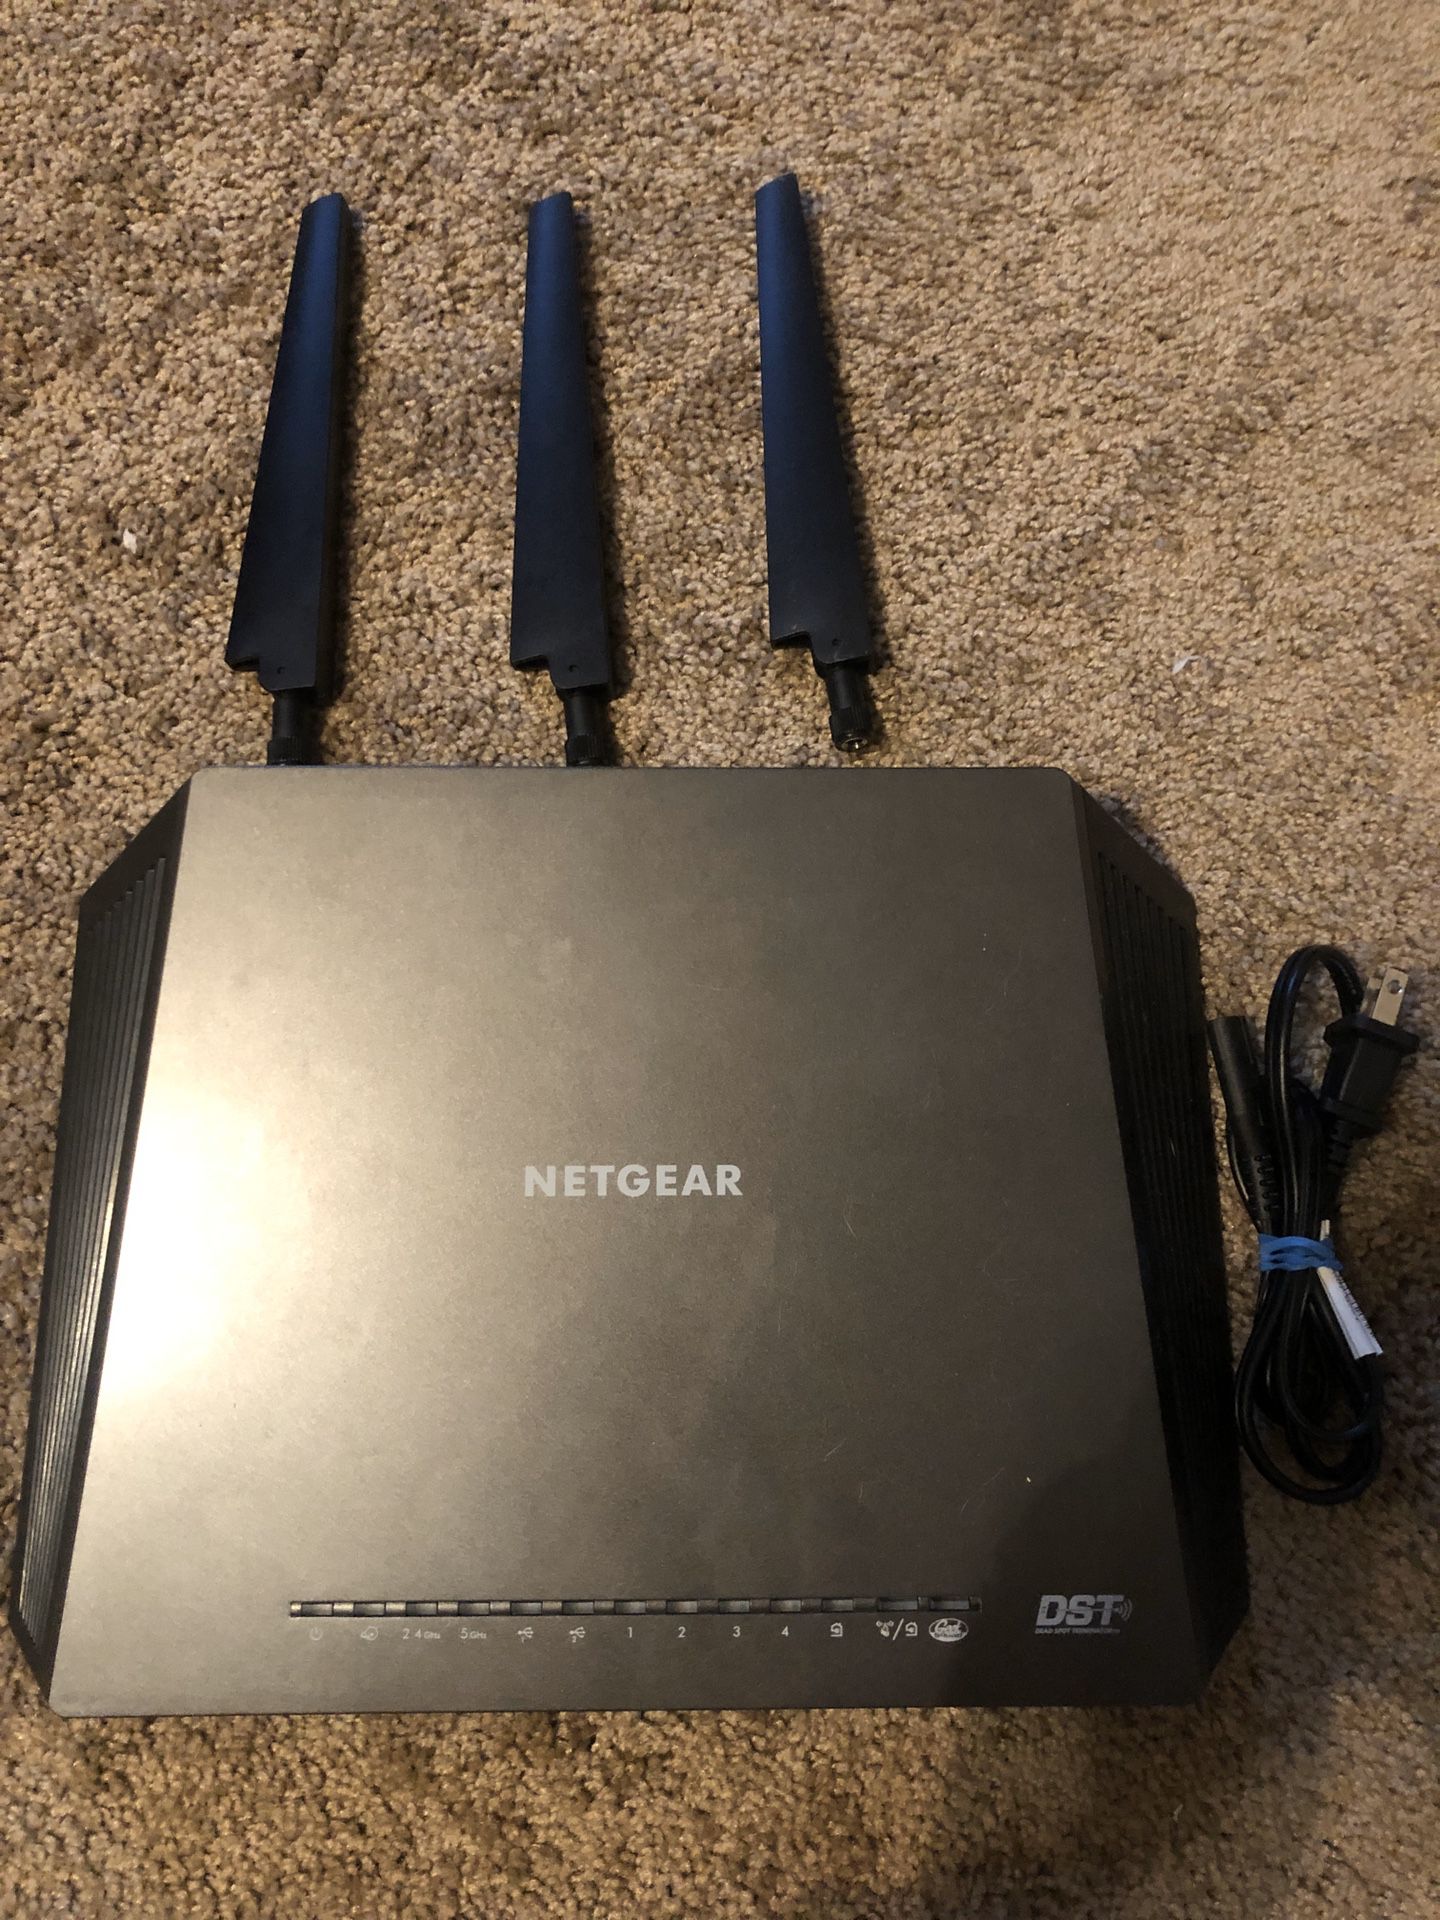 Netgear AC1900 Dual Band Nighthawk Router